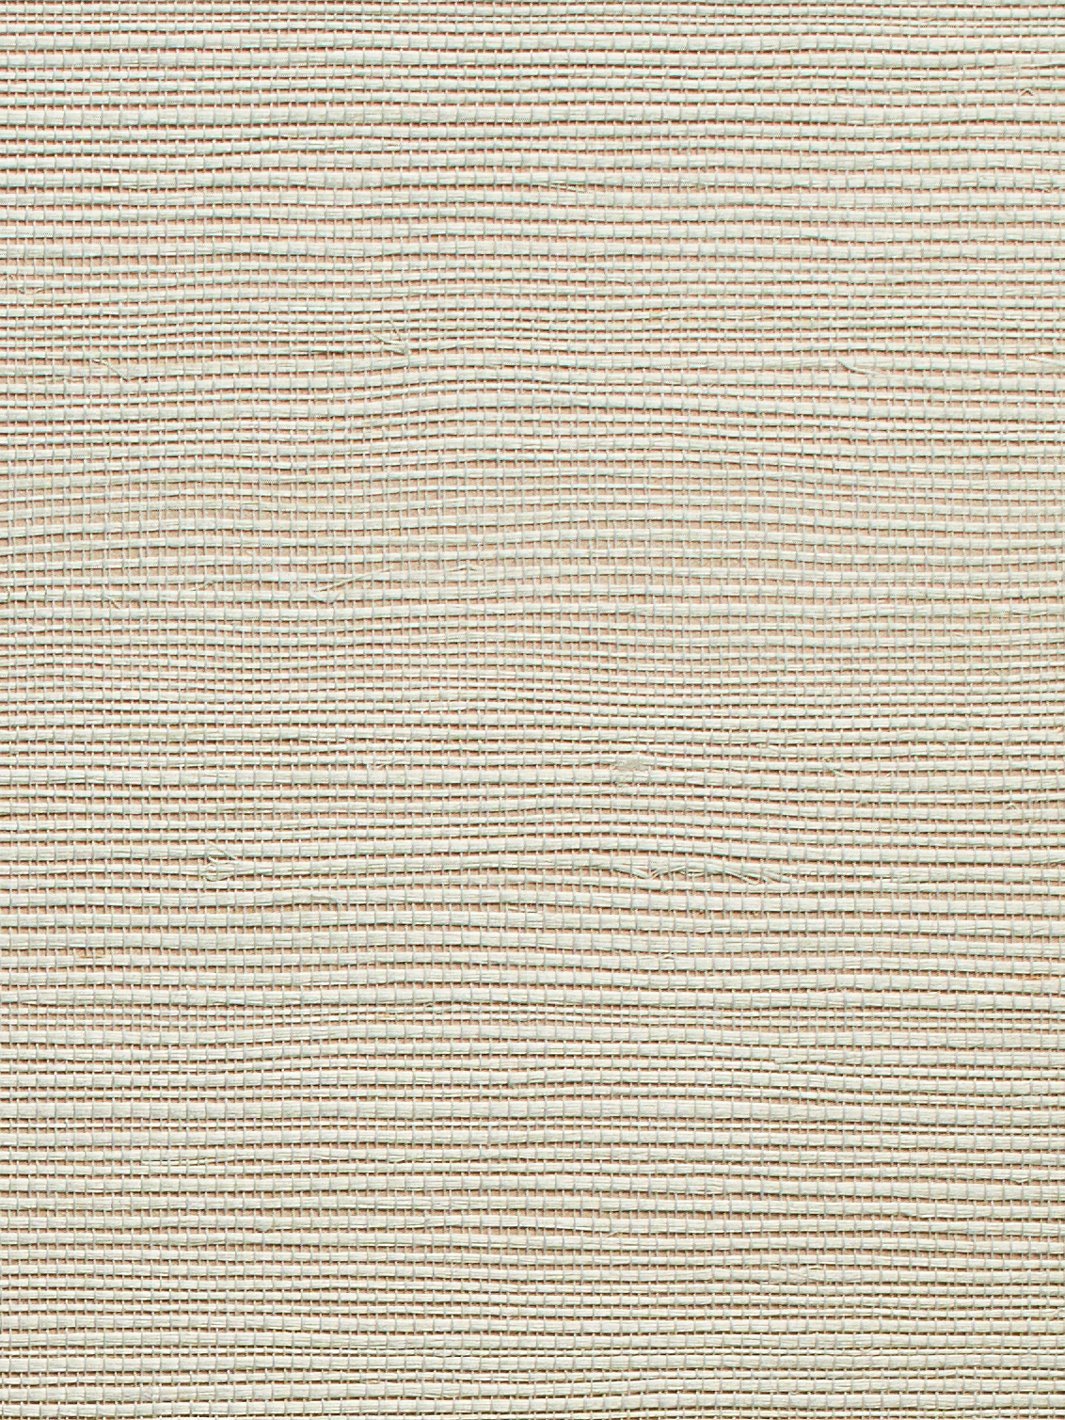 'Solid Grasscloth' Wallpaper by Wallshoppe - Gray